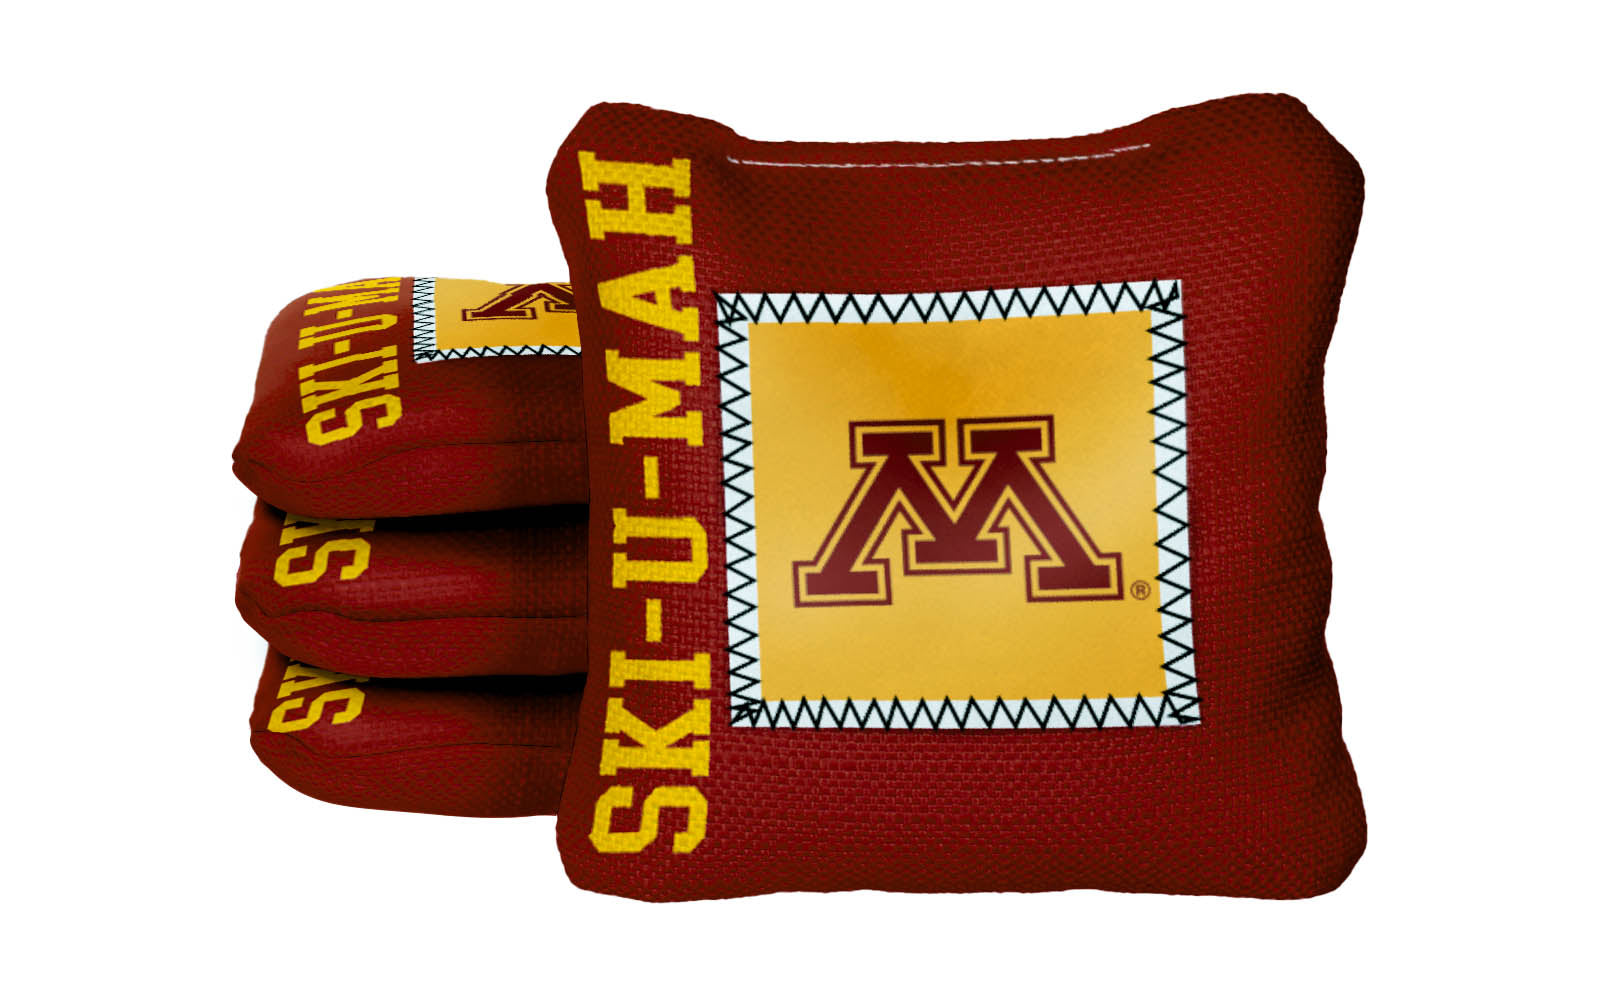 Officially Licensed Collegiate Cornhole Bags - Gamechangers - Set of 4 - University of Minnesota